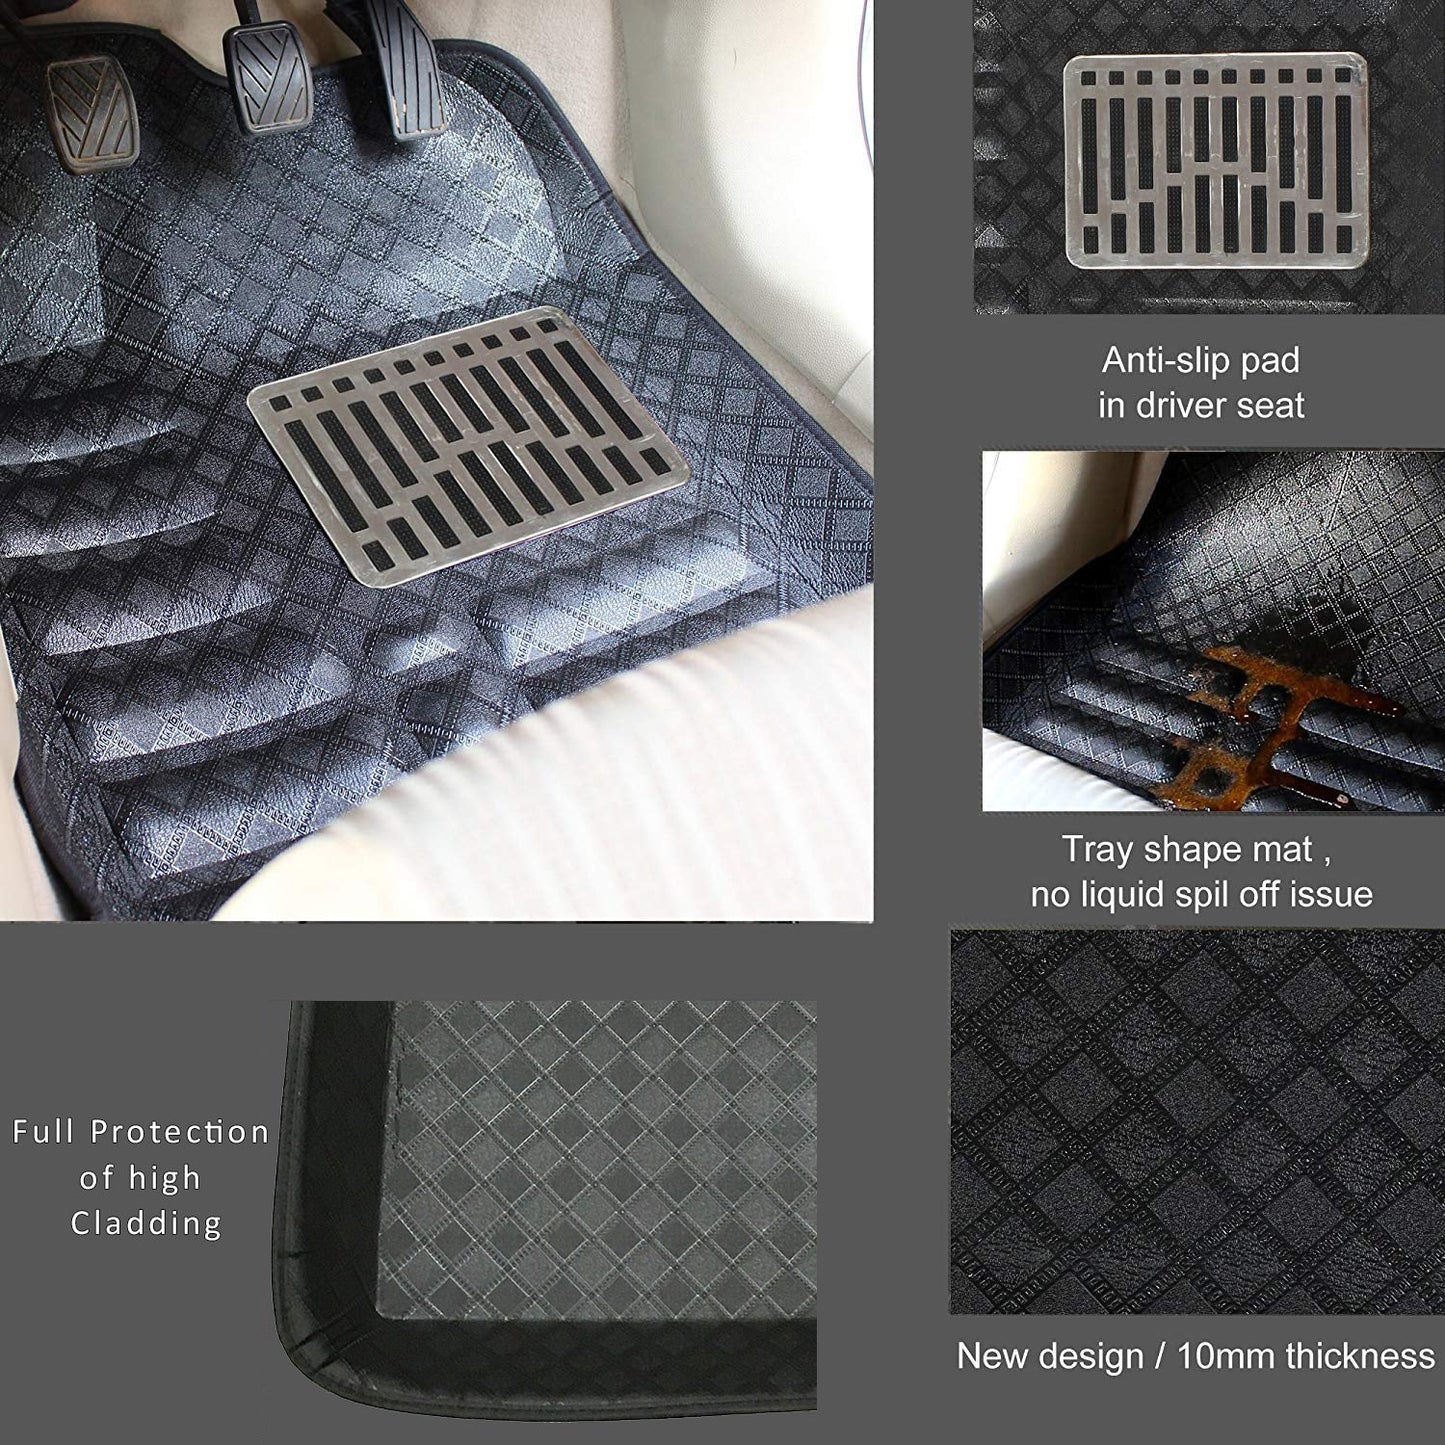 Oshotto 4D Artificial Leather Car Floor Mats For Maruti Suzuki Suzuk Swift 2018-2023 - Set of 3 (2 pcs Front & one Long Single Rear pc) - Black